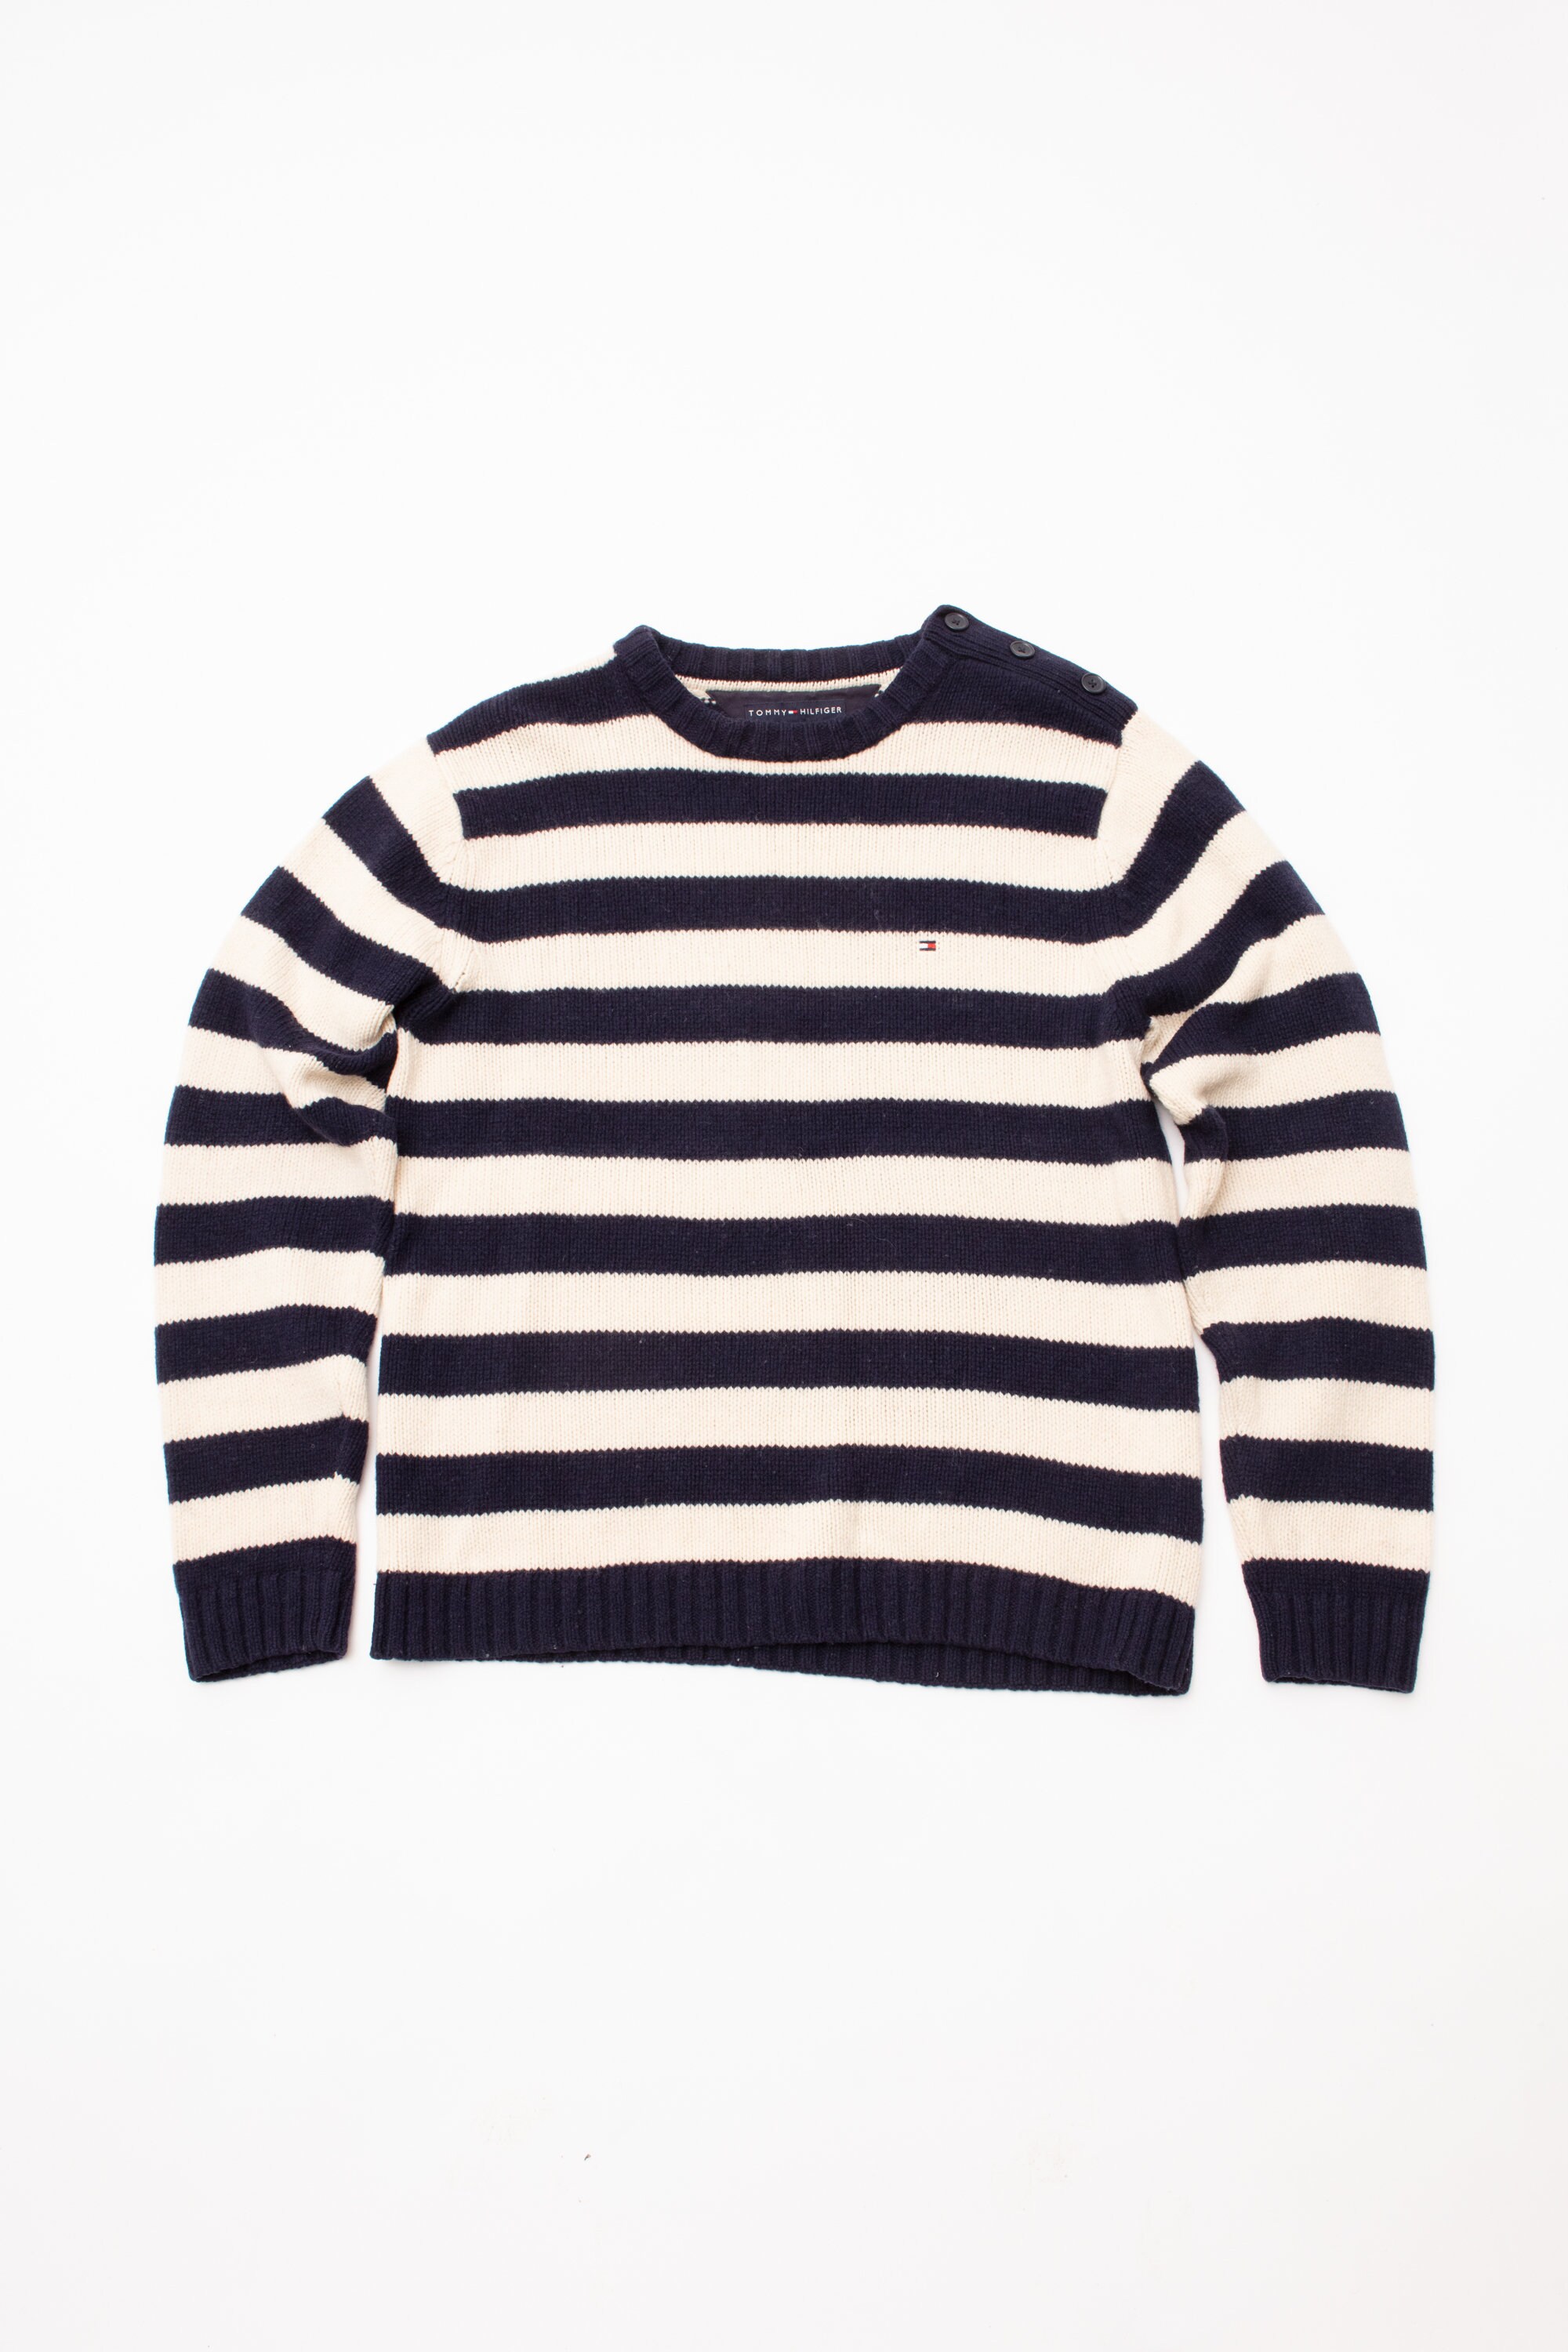 Vintage Tommy Hilfiger Sweater Wool Bold Stripe Blue White | Etsy